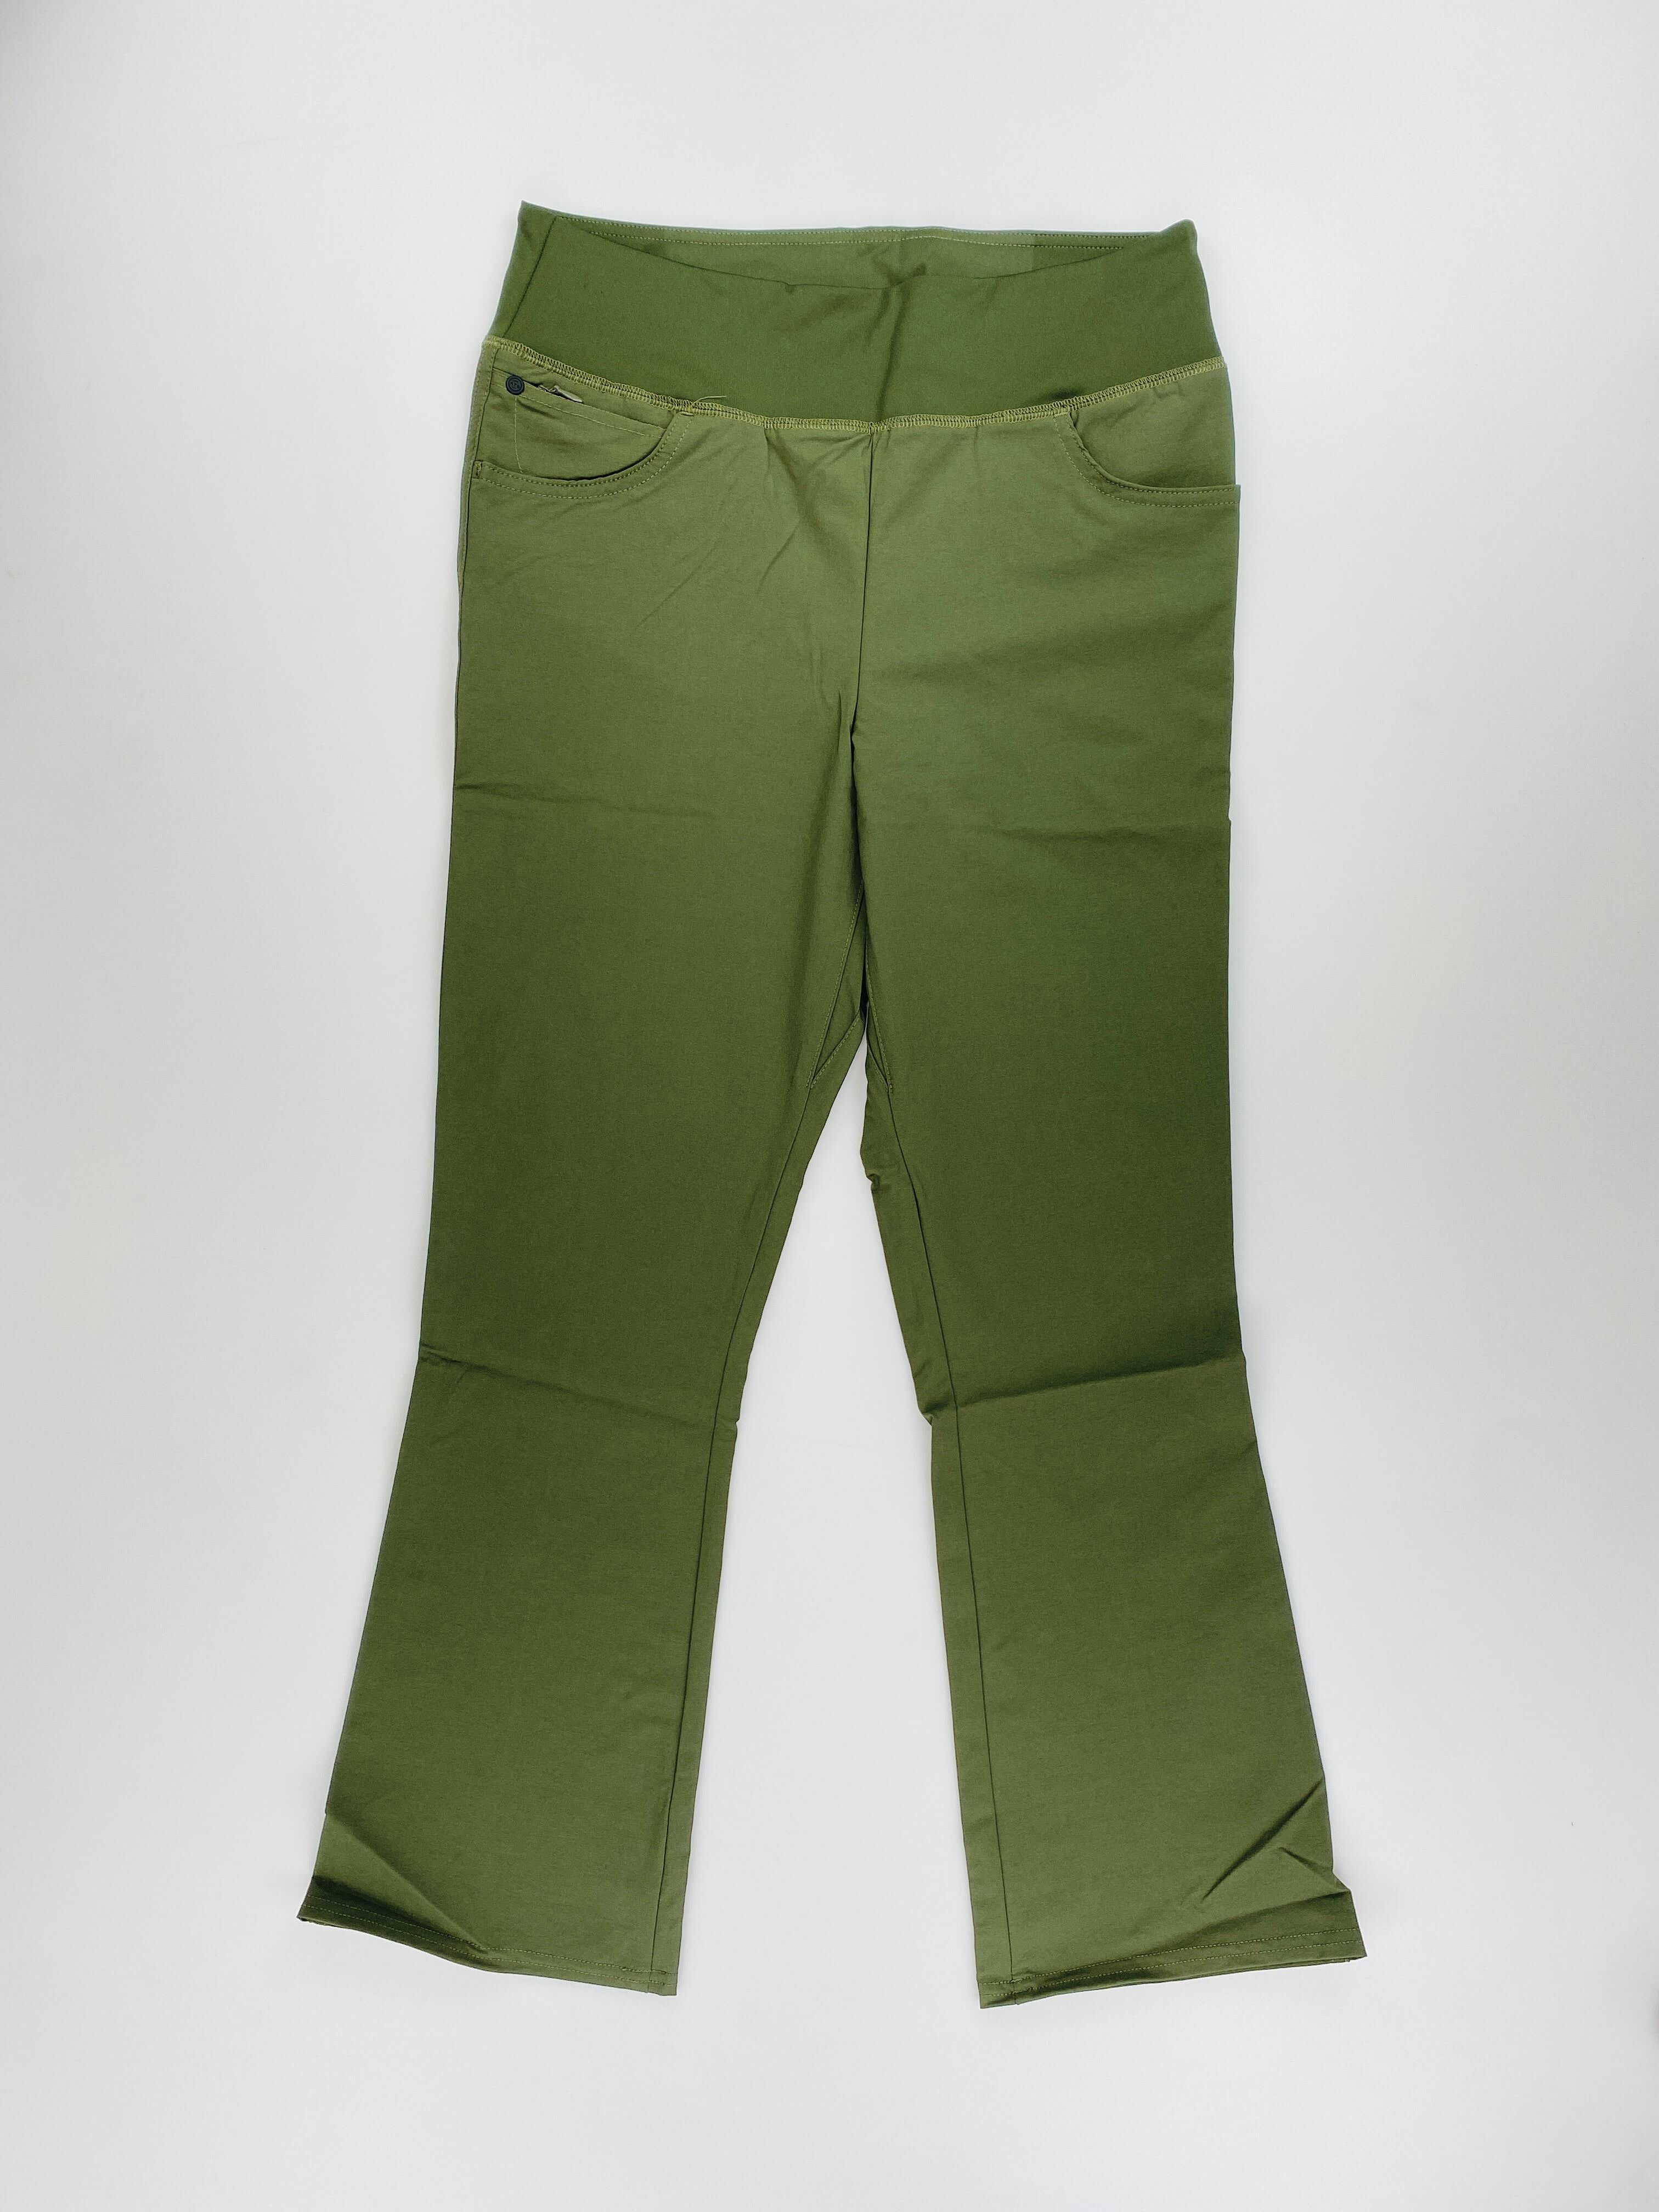 Wrangler Fwds Kick Flare - Seconde main Pantalon randonnée femme - Vert olive - US 28 | Hardloop